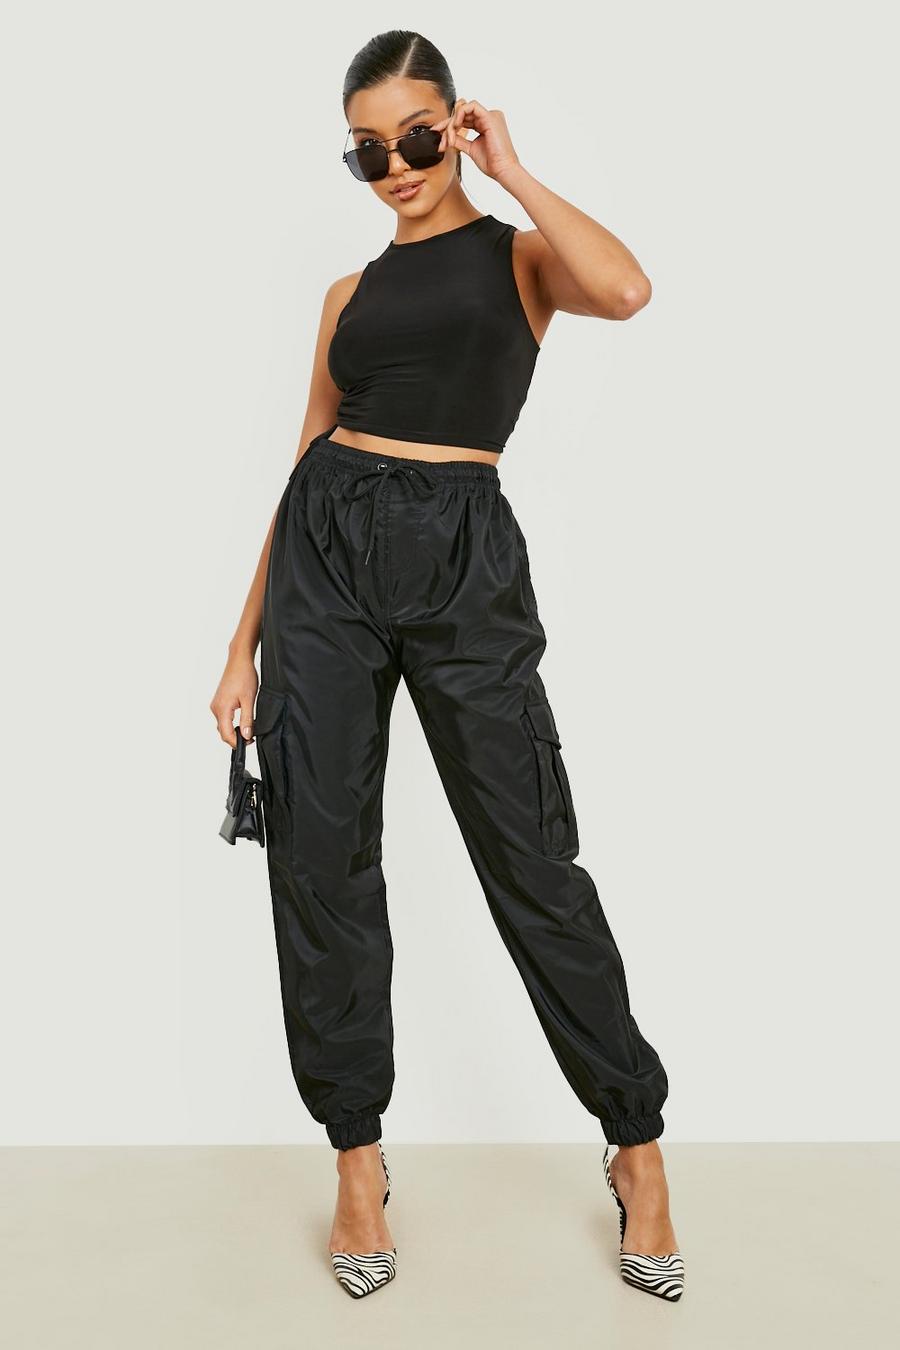 Shinestar Black Flowy Cargo Style Jogger Pants Women's Size Large NEW